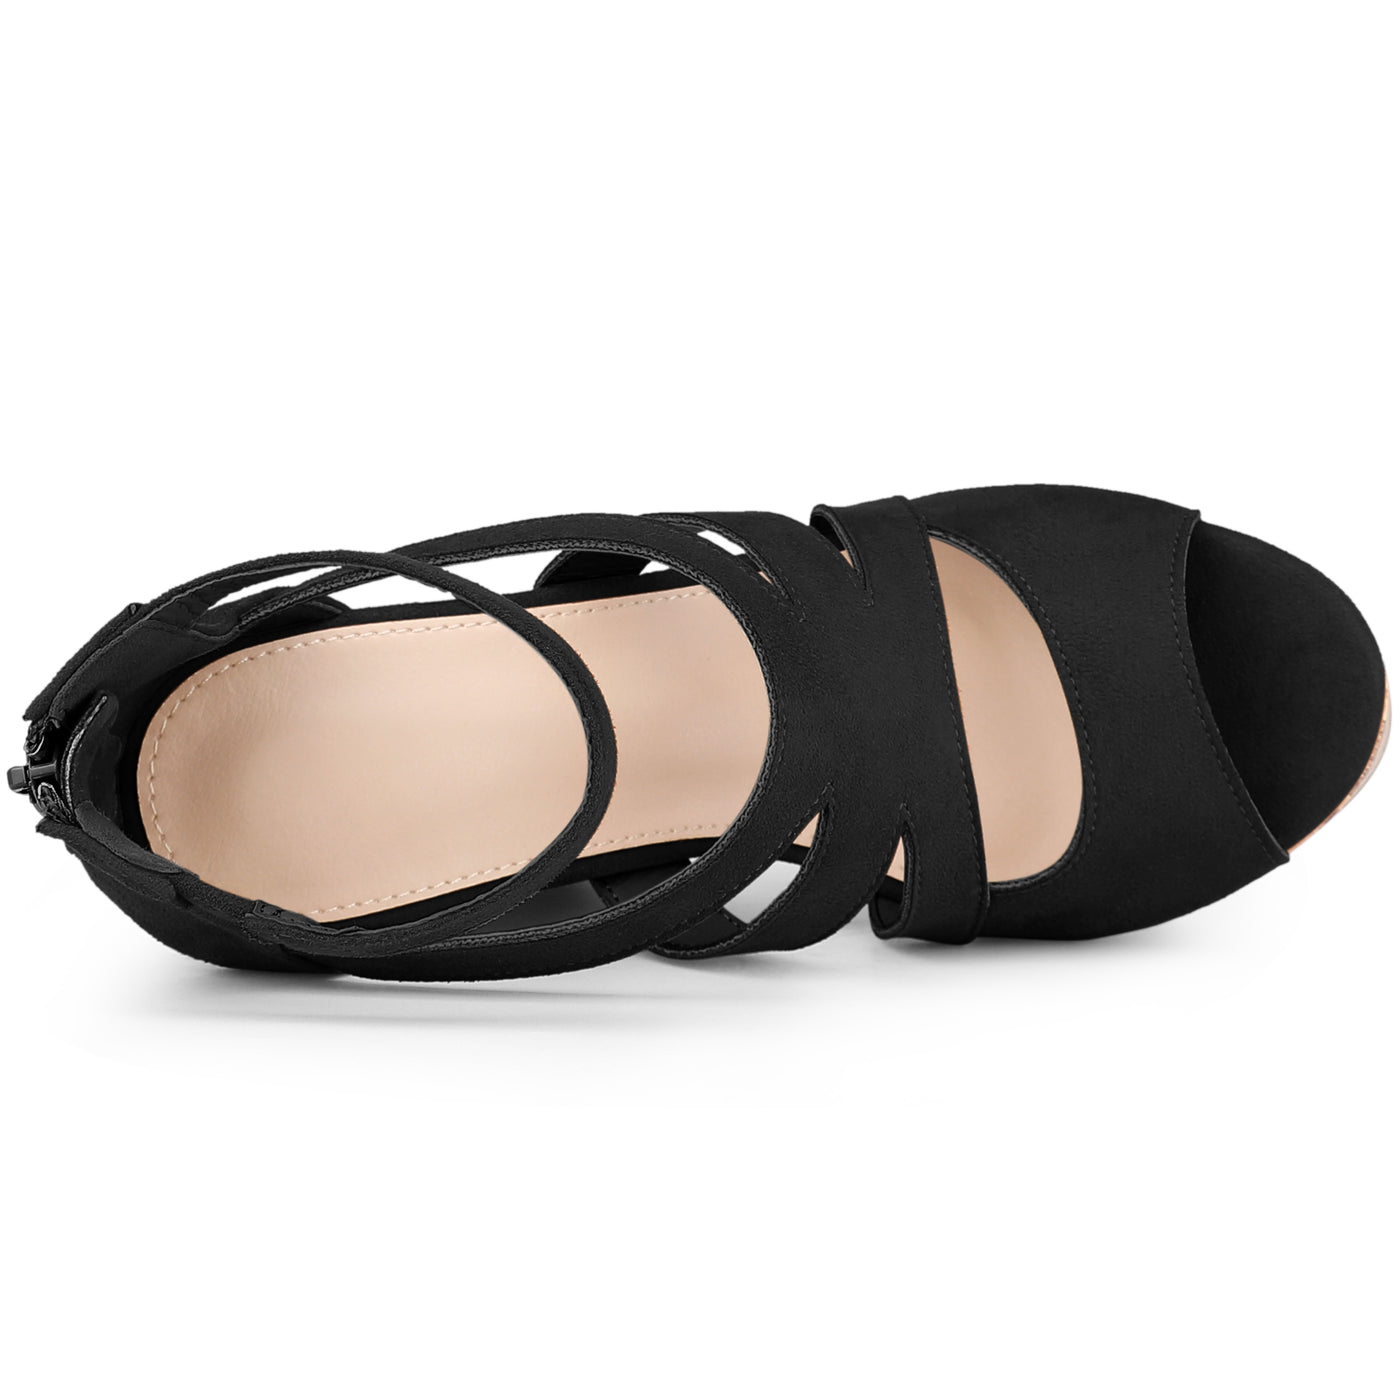 Allegra K Women's Platform Peep Toe Strappy Back Zip Wedge Heel Sandal